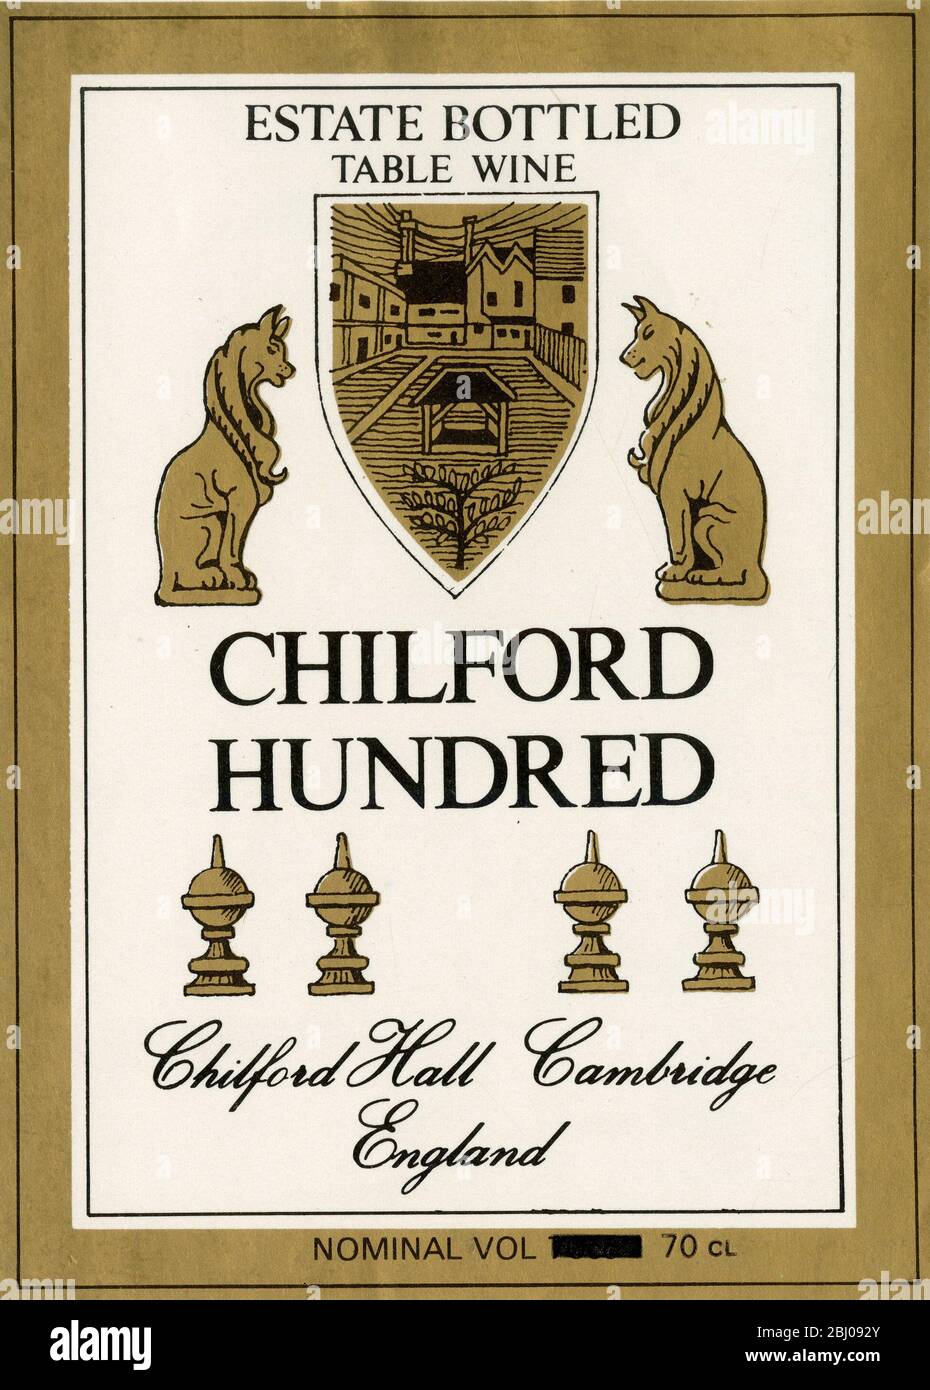 Wine Label. - Estate Bottled Table Wine. Chilford Hundred. Chilford Hall, Cambridge, England. 1976 Dry. Schonburger Ortega. Stock Photo